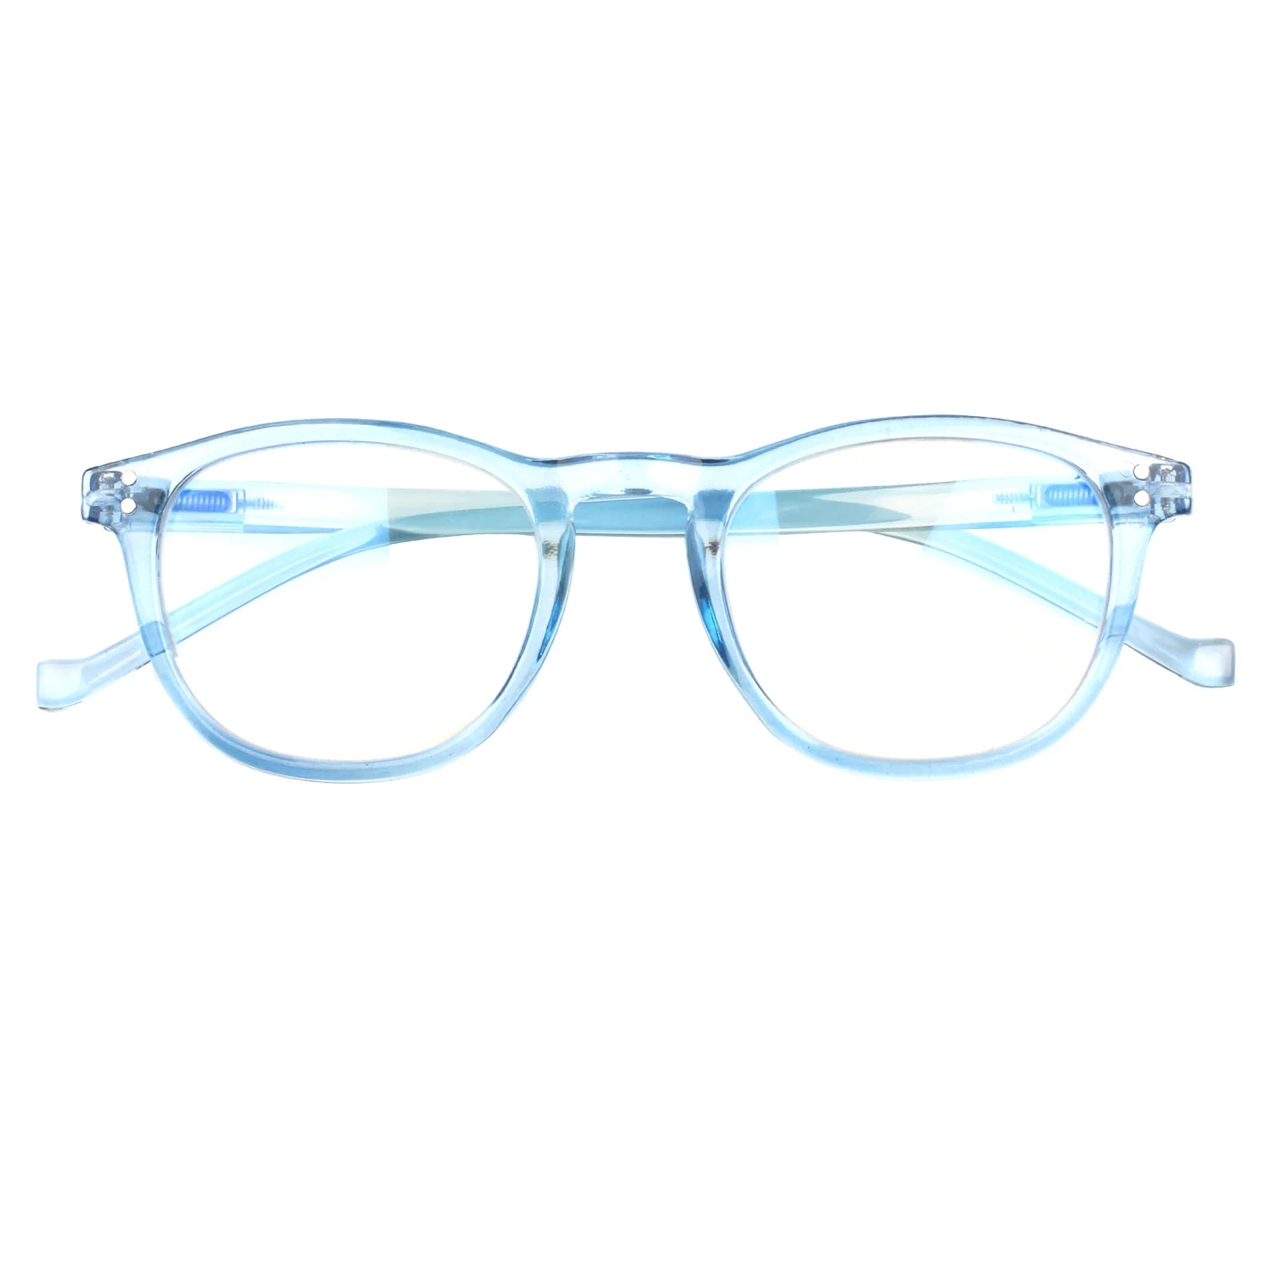 Ultimate VisionGuard Blue Light Glasses